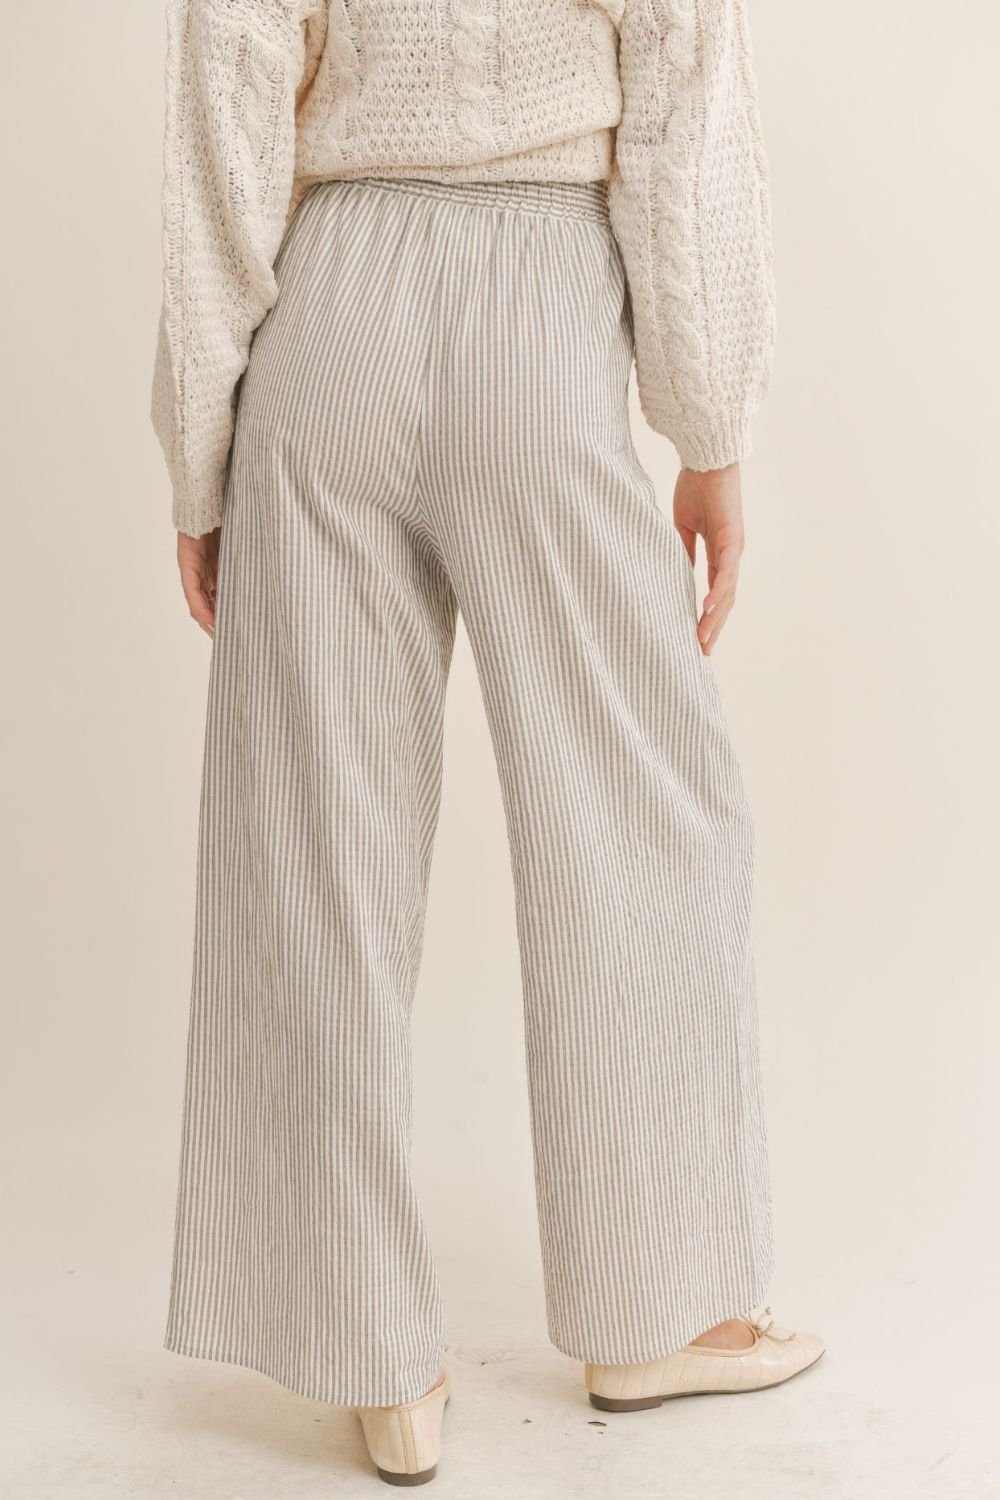 Women's Striped Cotton Pants | Sadie & Sage | Taupe - Women's Pants - Blooming Daily